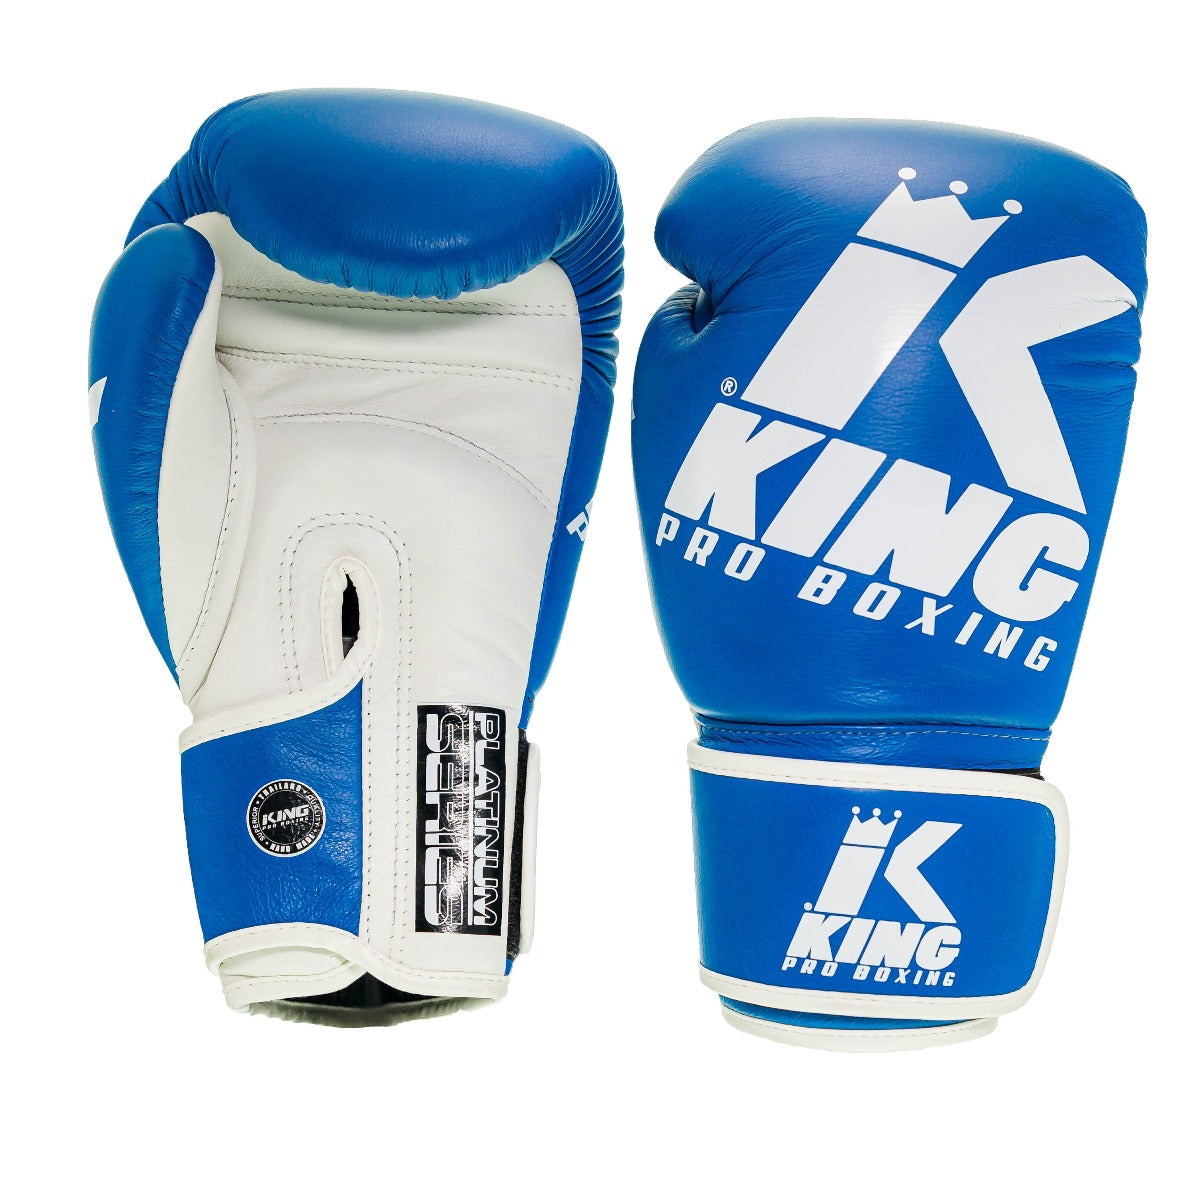 King PRO boxing boxing gloves - BG  PLATINUM 2